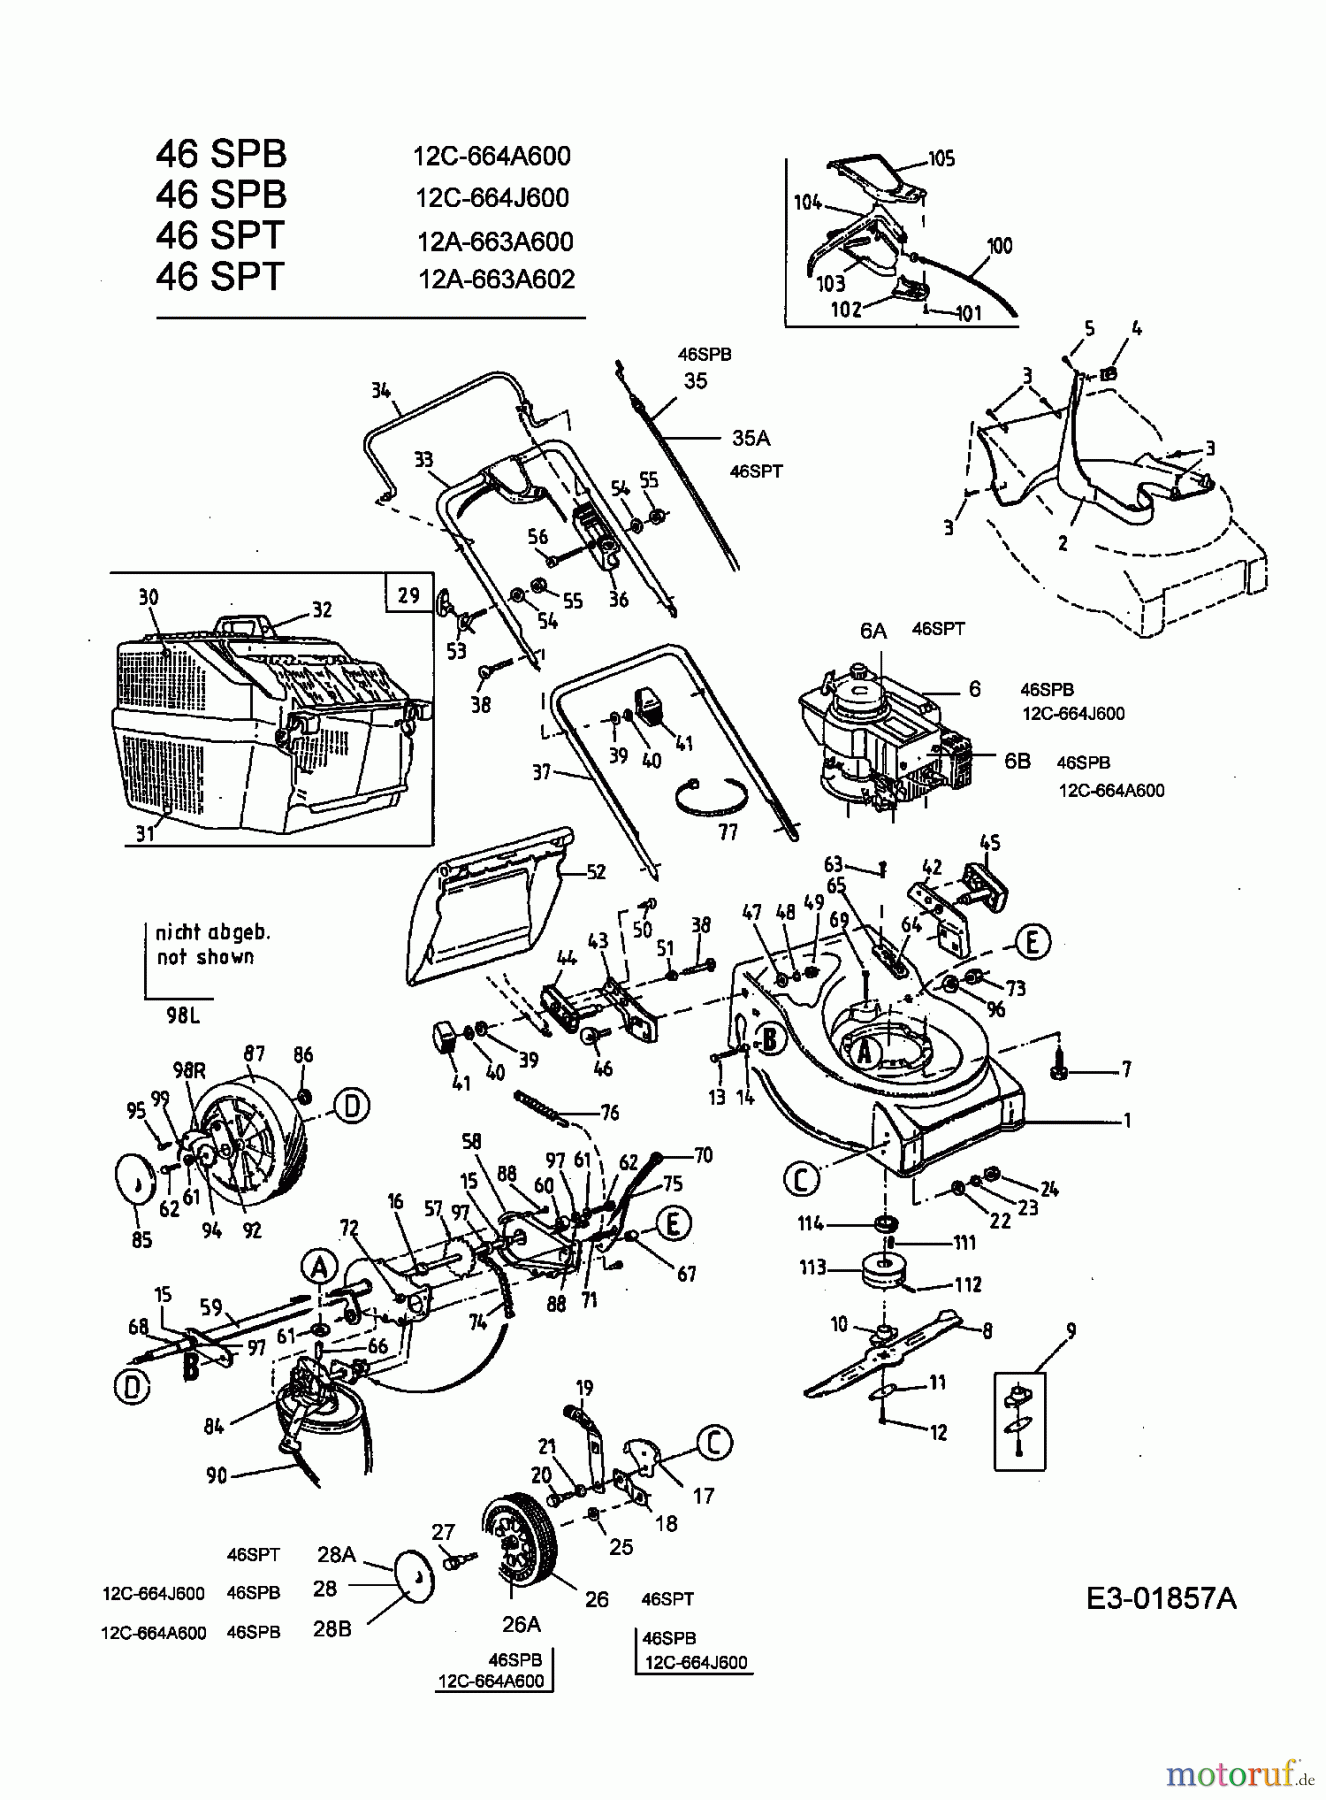  MTD Motormäher mit Antrieb 46 SPT 12A-663A600  (2003) Grundgerät